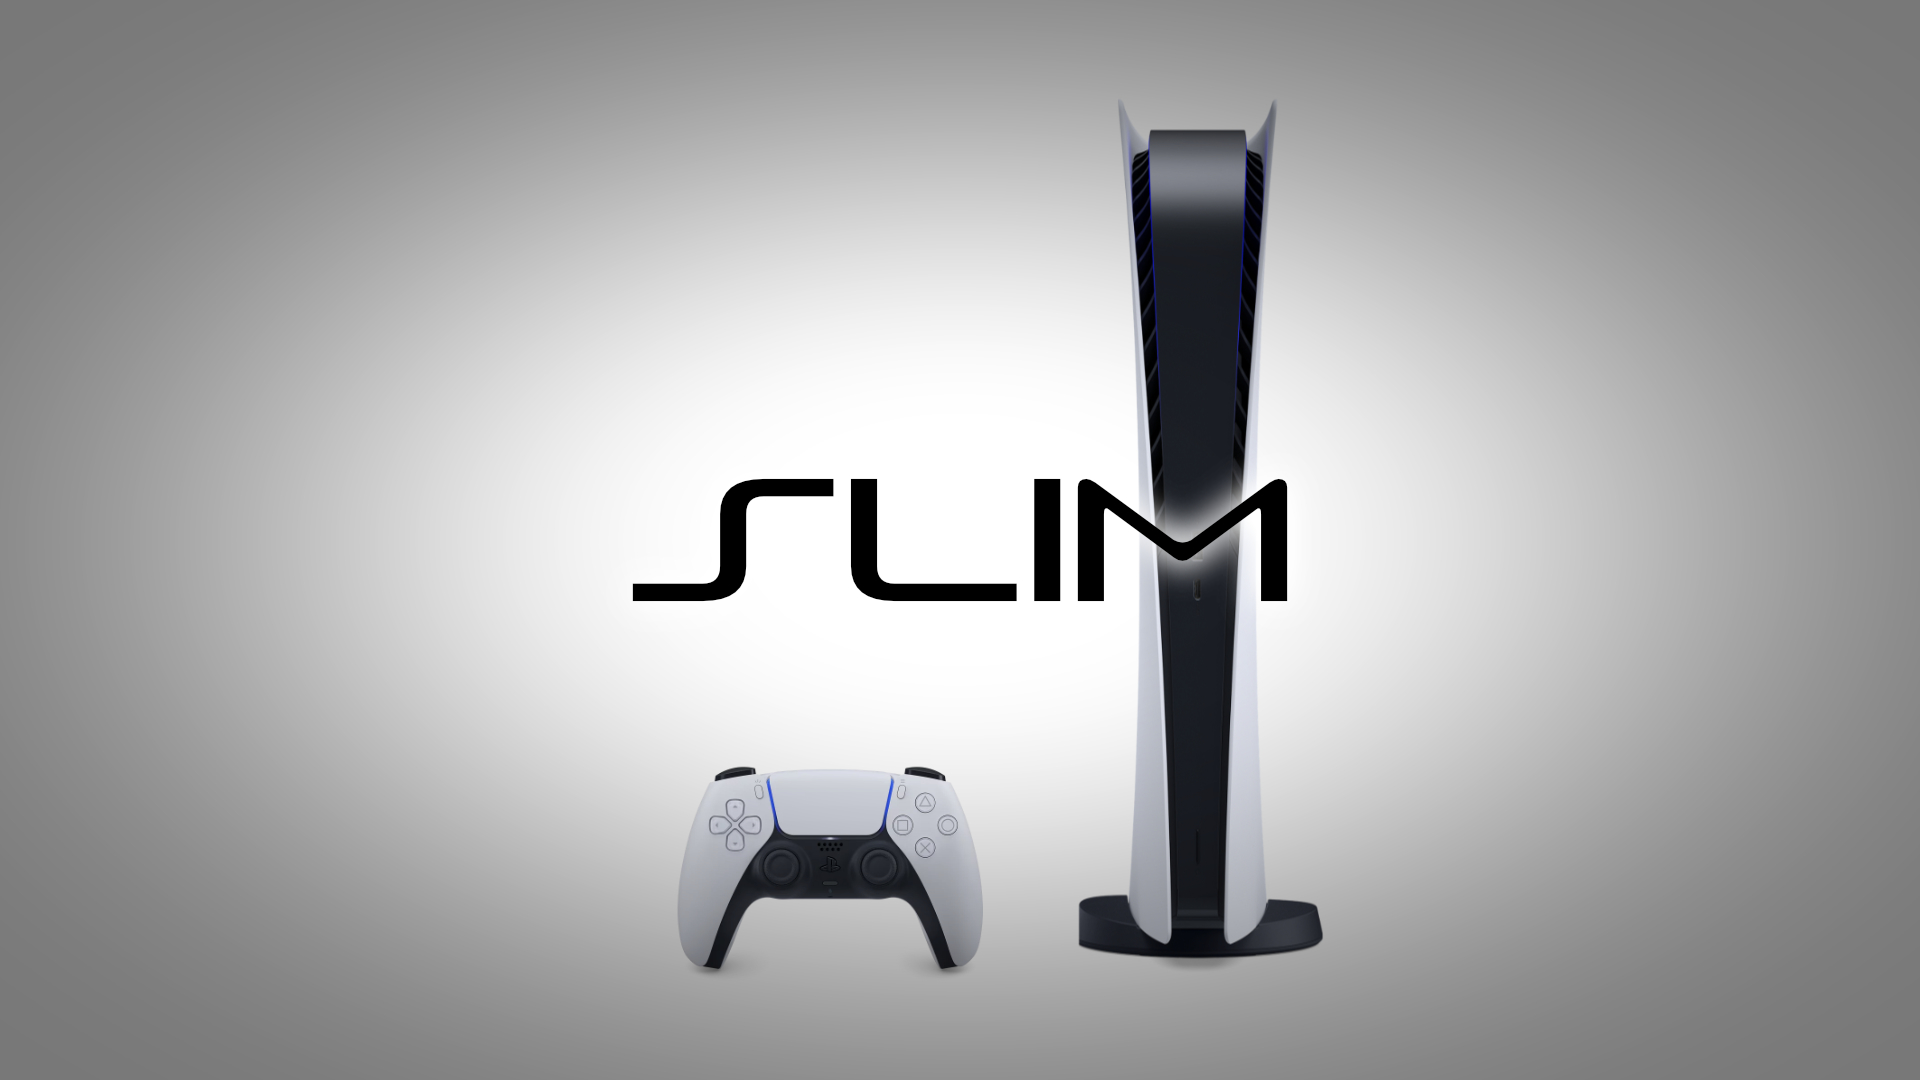 PlayStation 5 Slim Might Be Released in 2023, Microsoft Believes